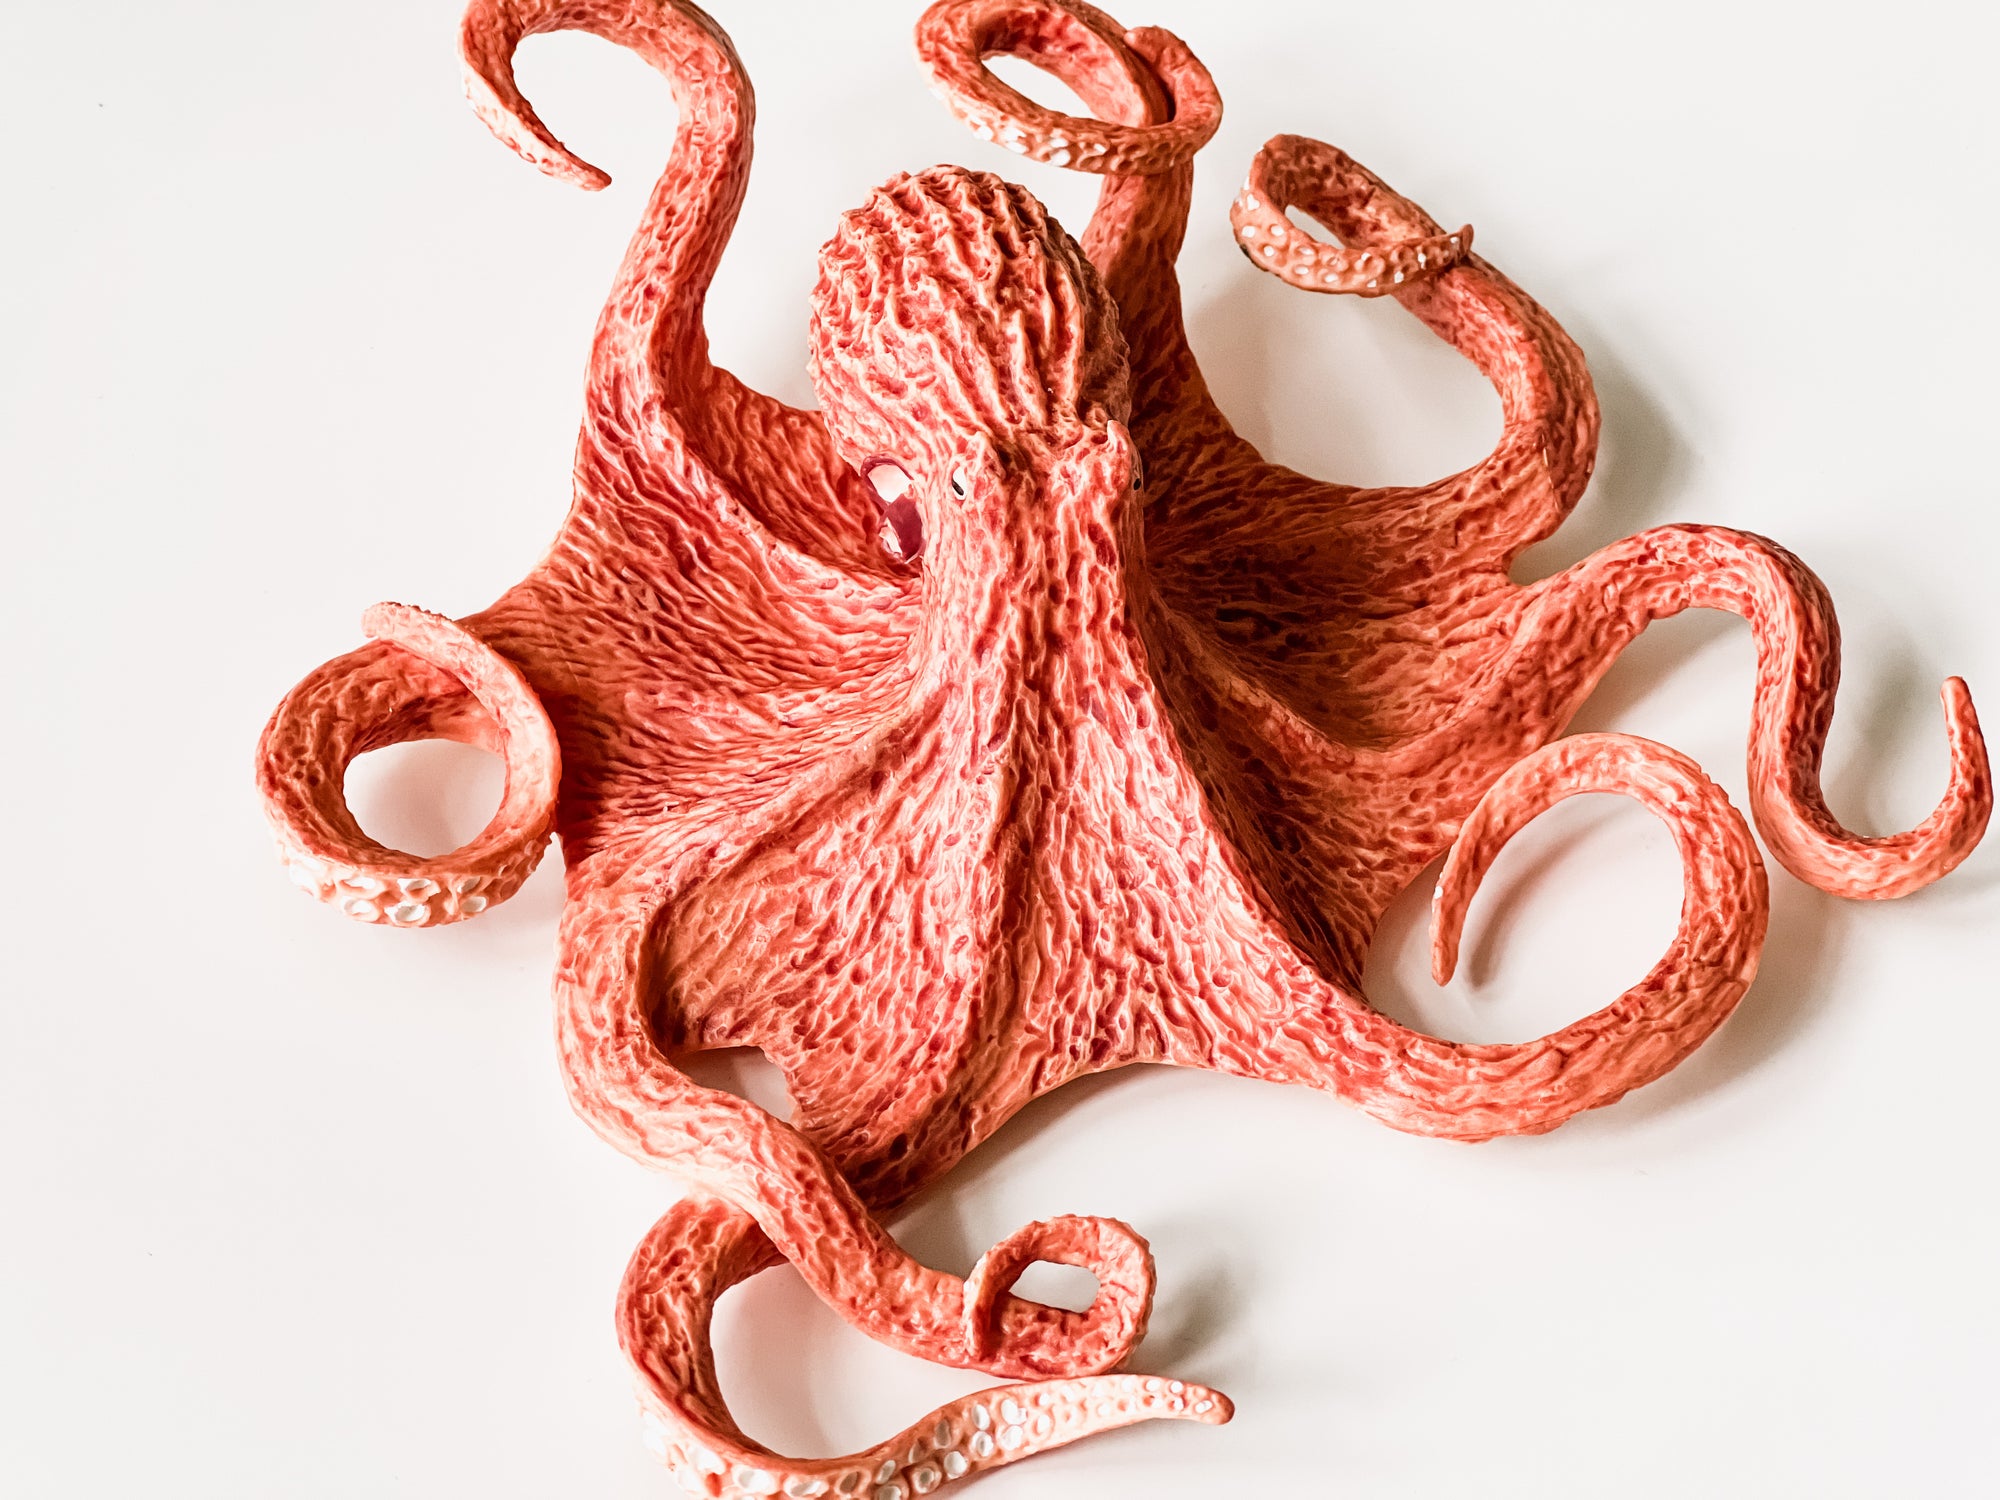 Giant Pacific Octopus Figurine